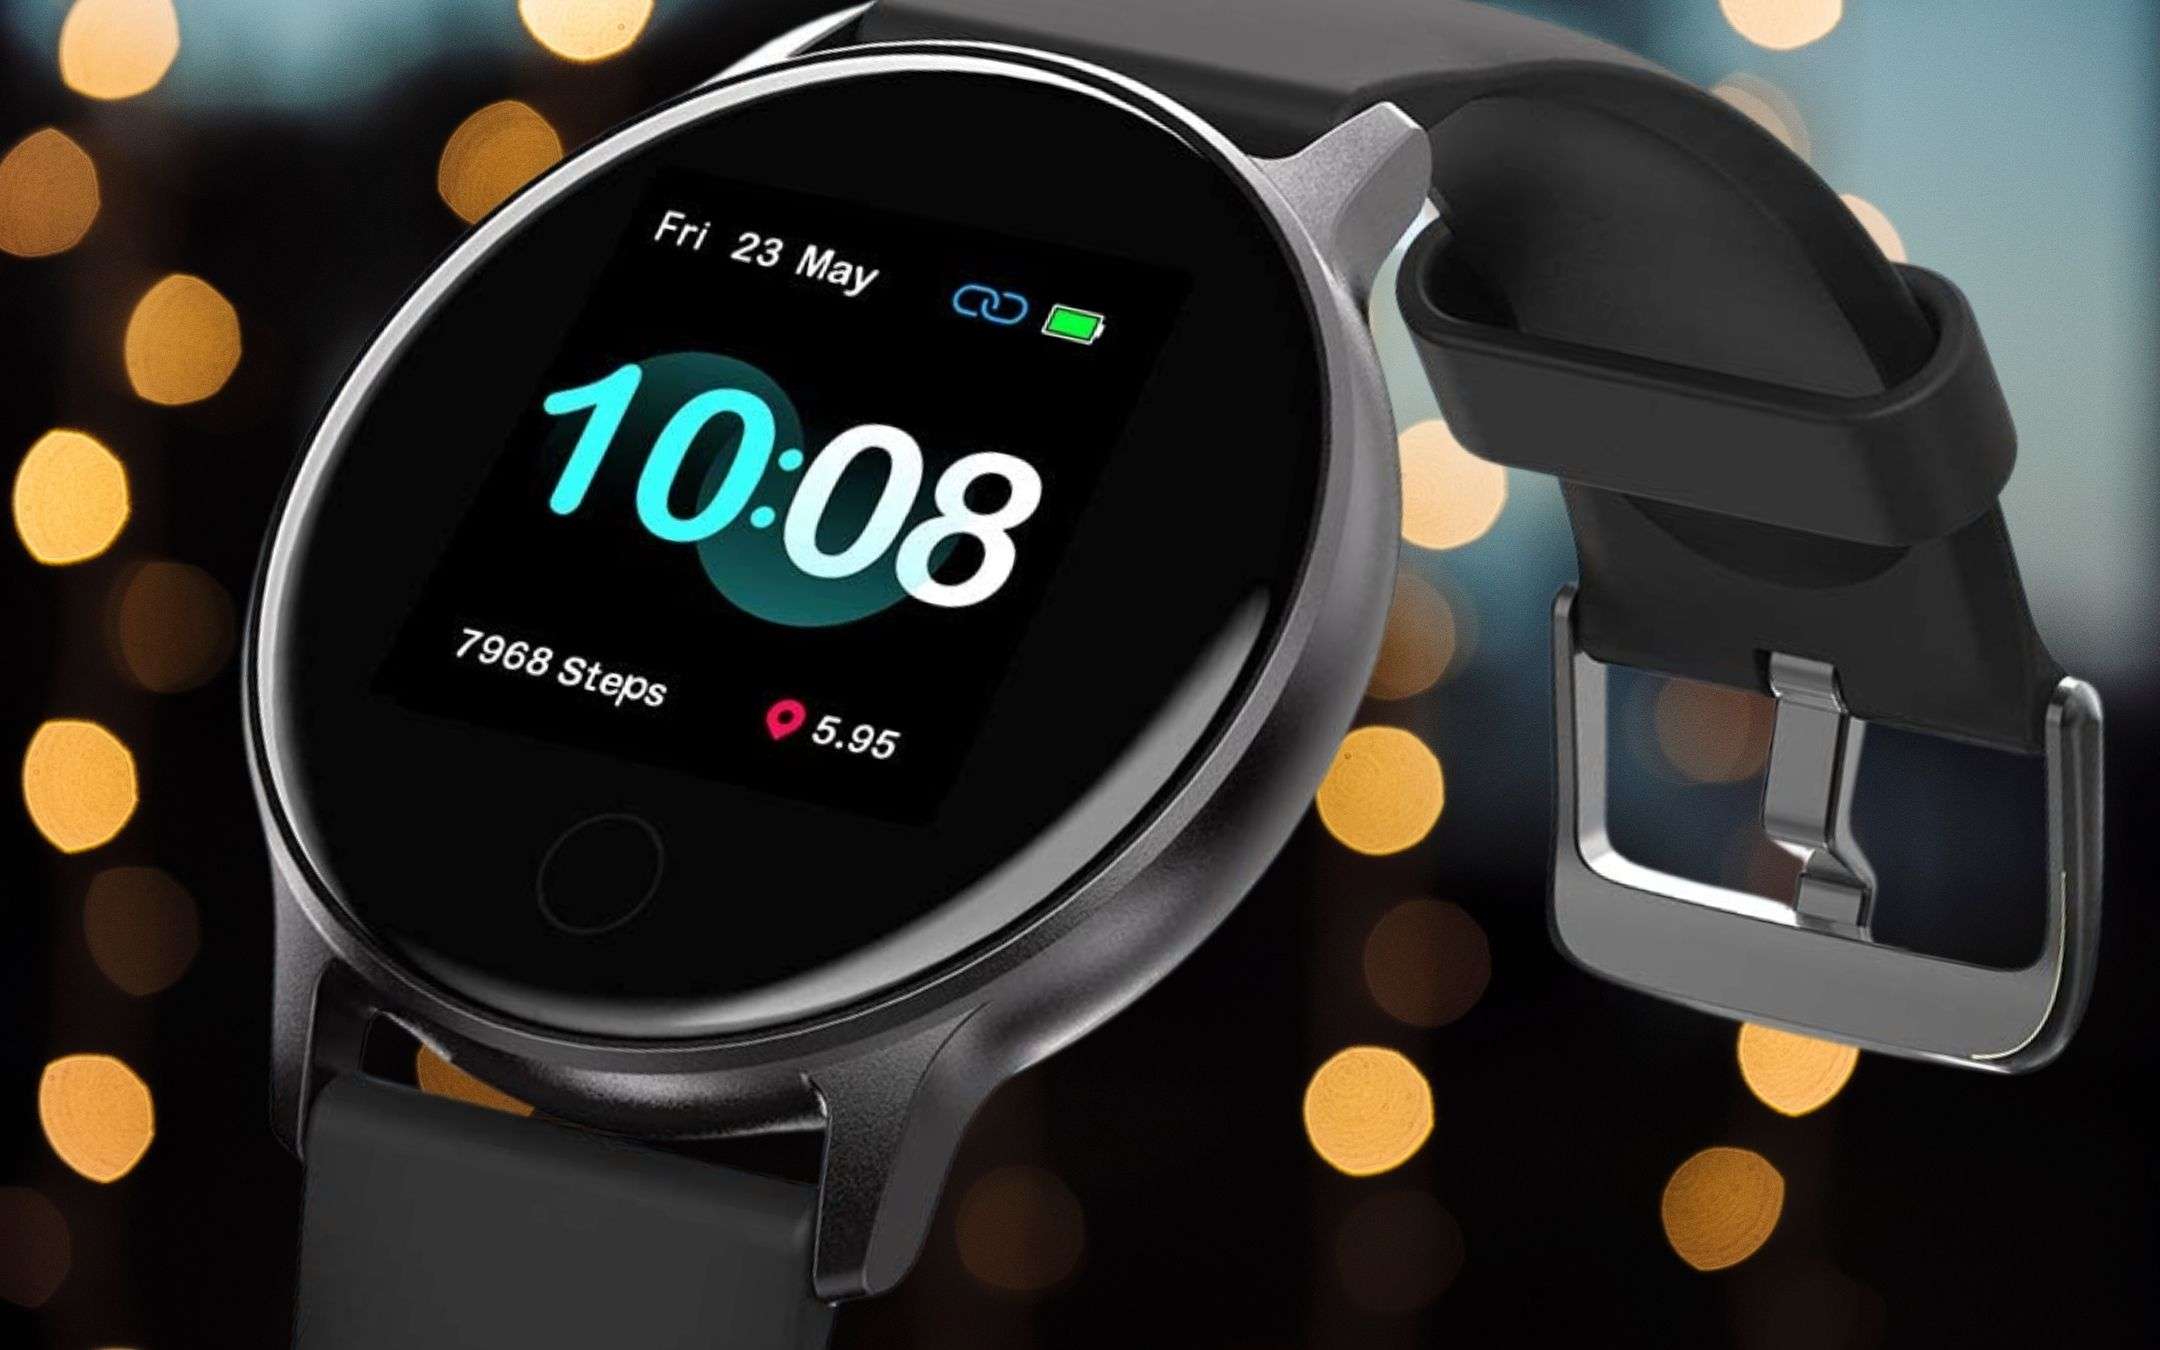 Elegante smartwatch a 23€: sconto WOW su Amazon